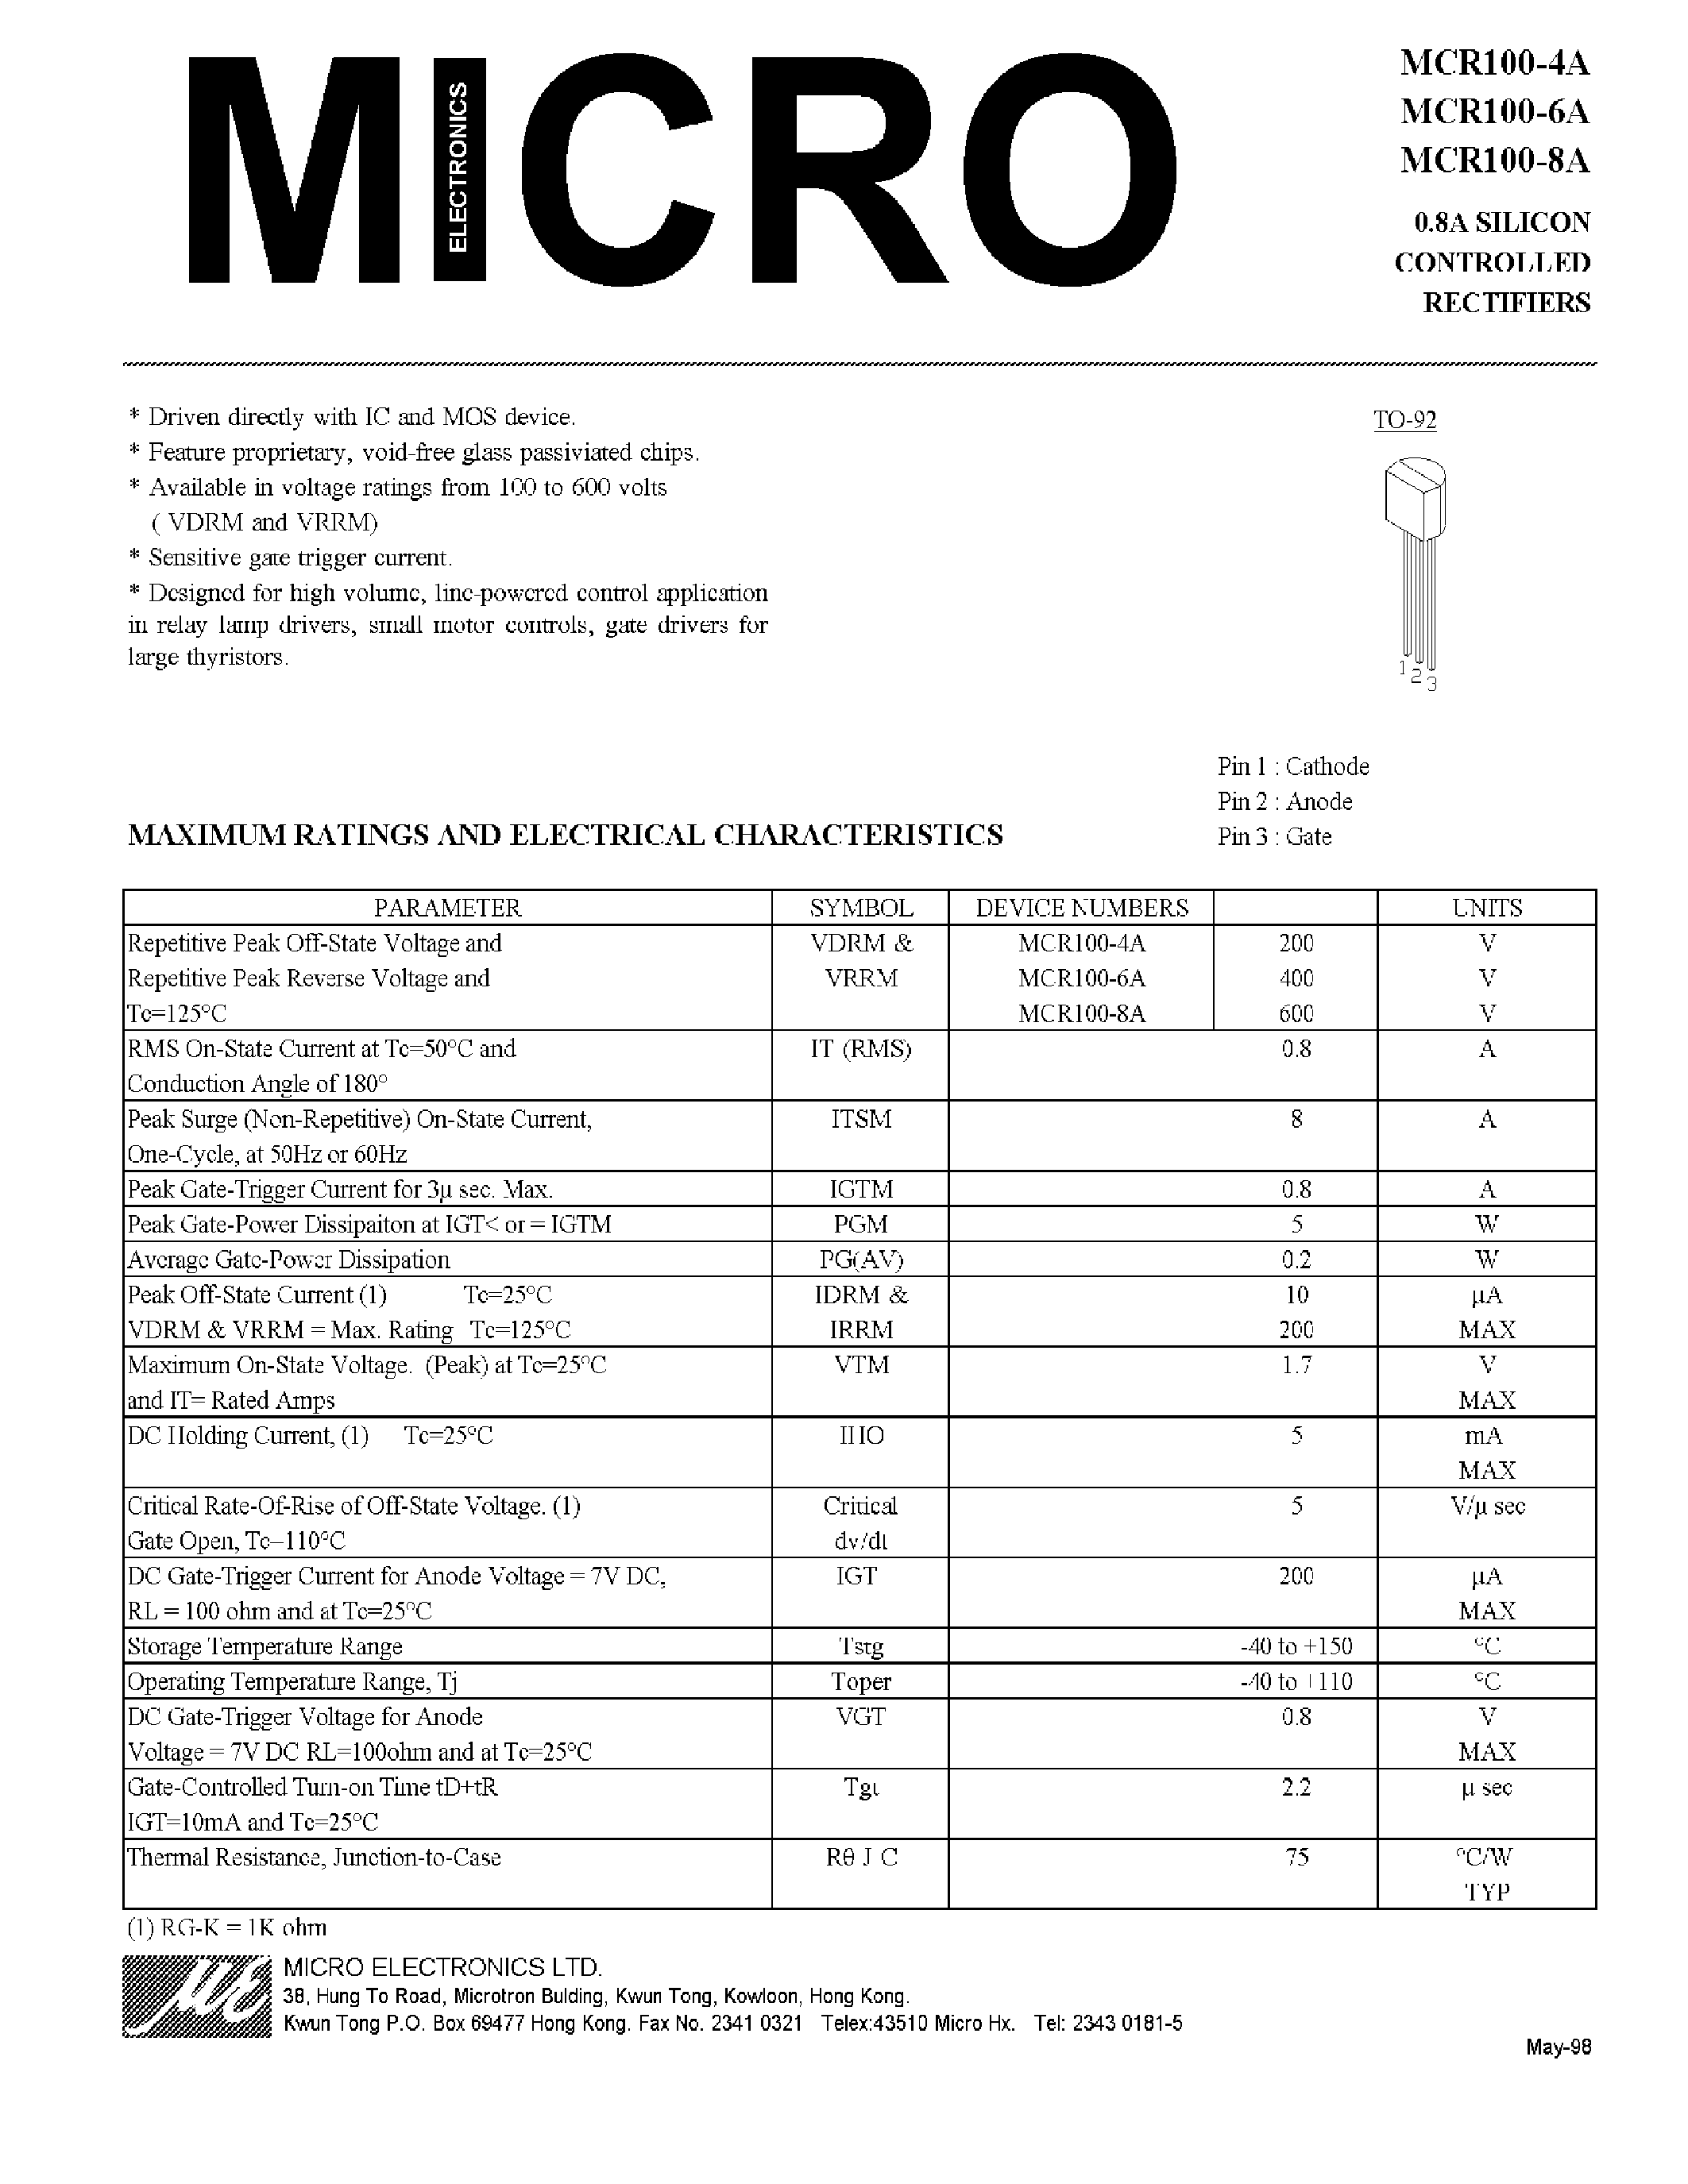 Datasheet MCR100 - 0.8A SCR page 1